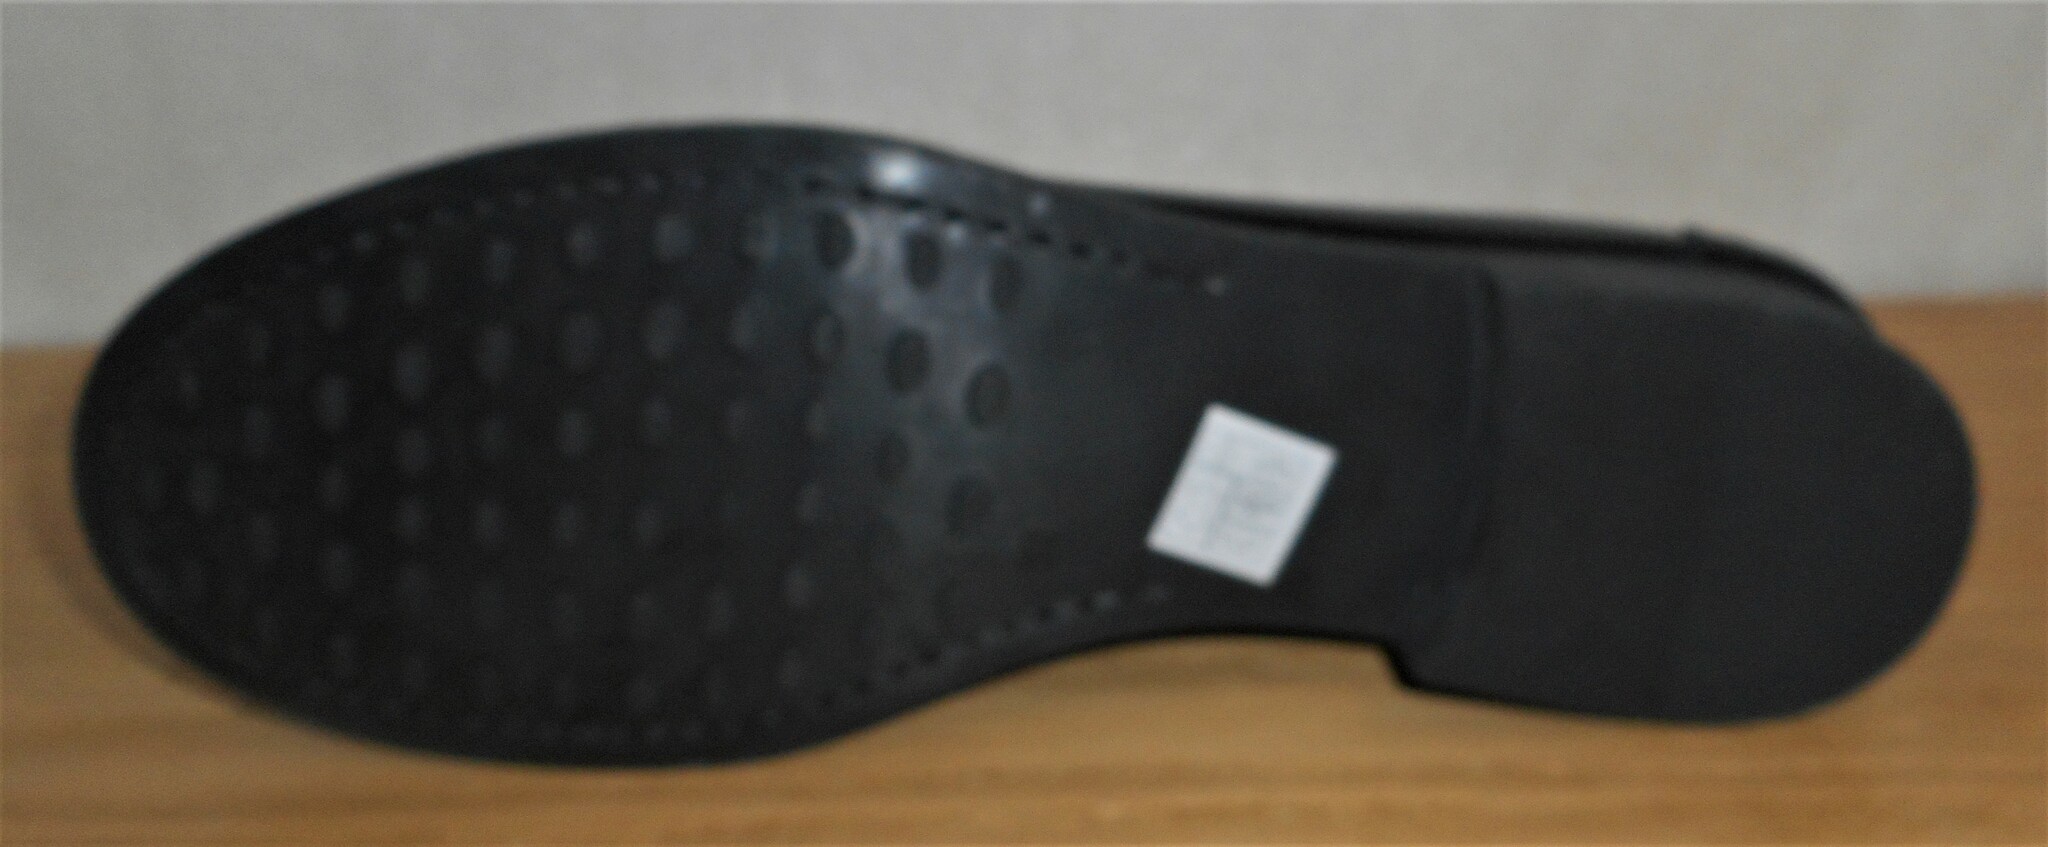 Svart, klassisk loafer med mörkt spänne - fabrikat Amberone